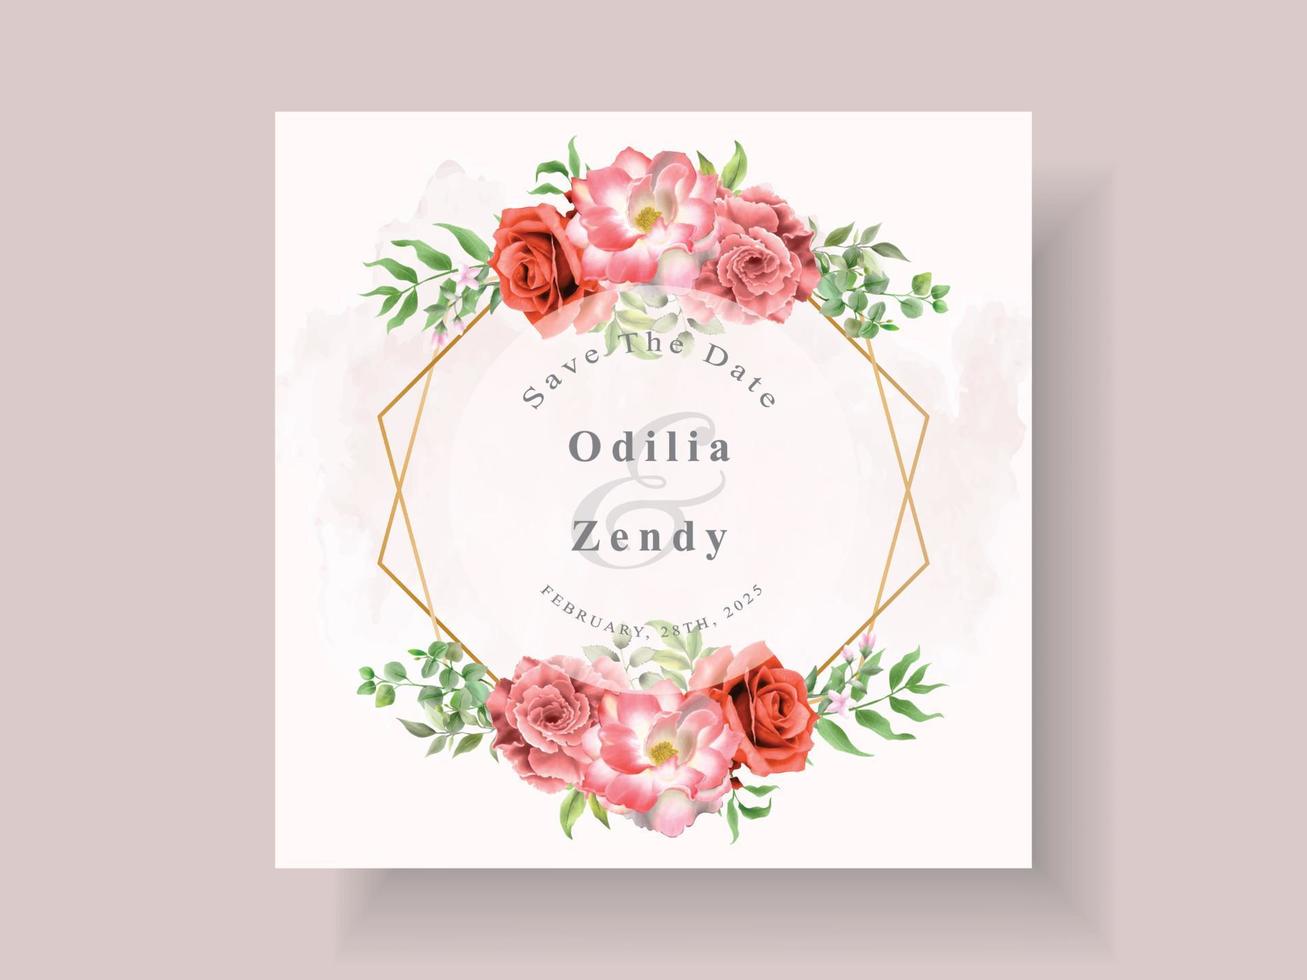 elegant wedding invitation template with beautiful floral design vector